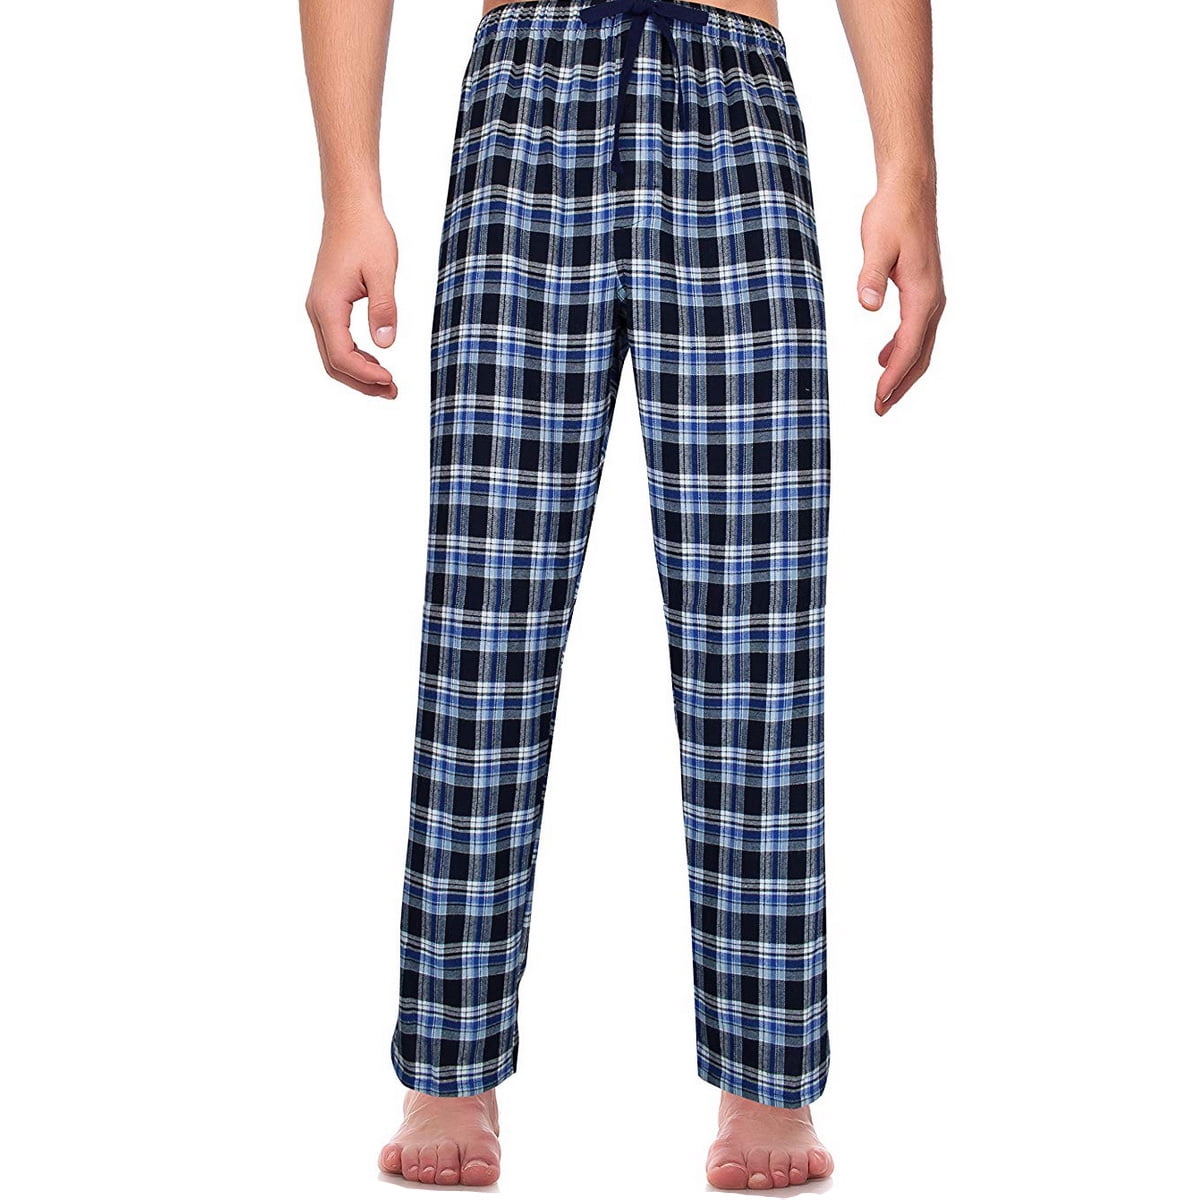 Men's Classic Plaid Pajama Pants Super Soft Big and Tall Sleepwear ...